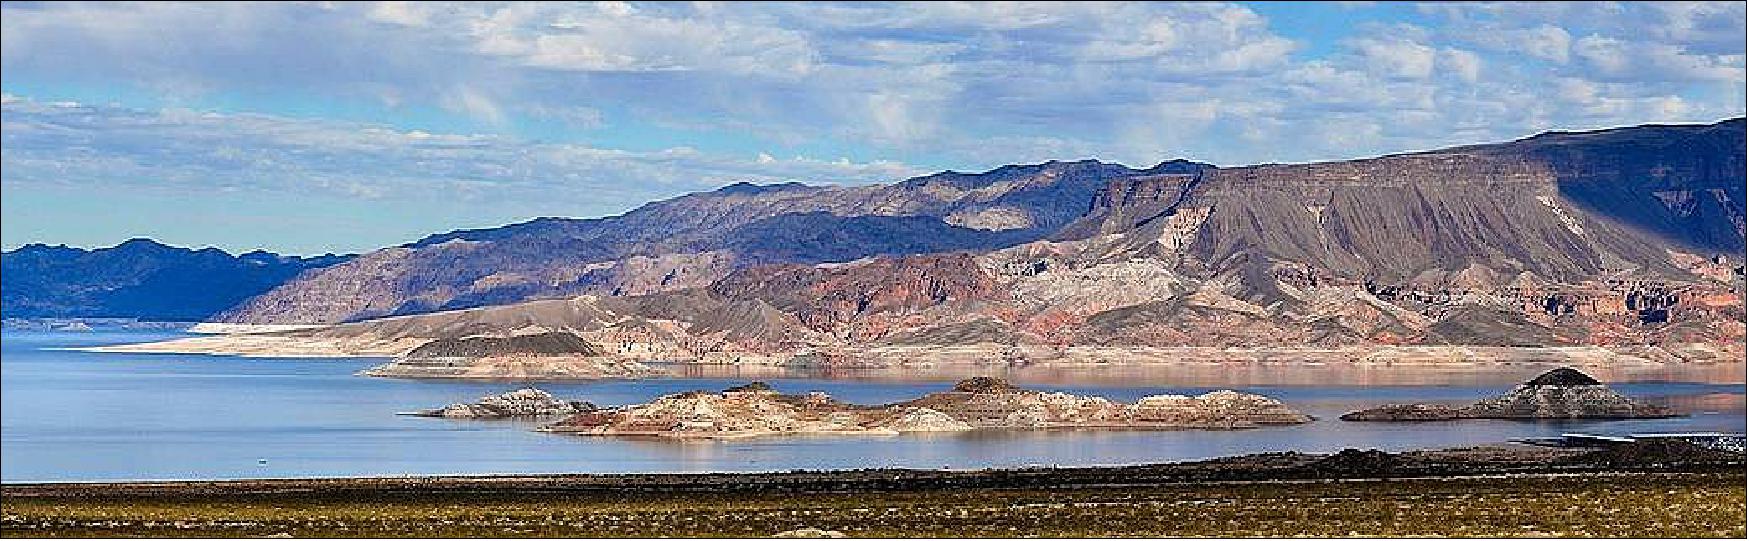 Figure 18: Lake Mead, along the Colorado River (image credit: National Park Service)